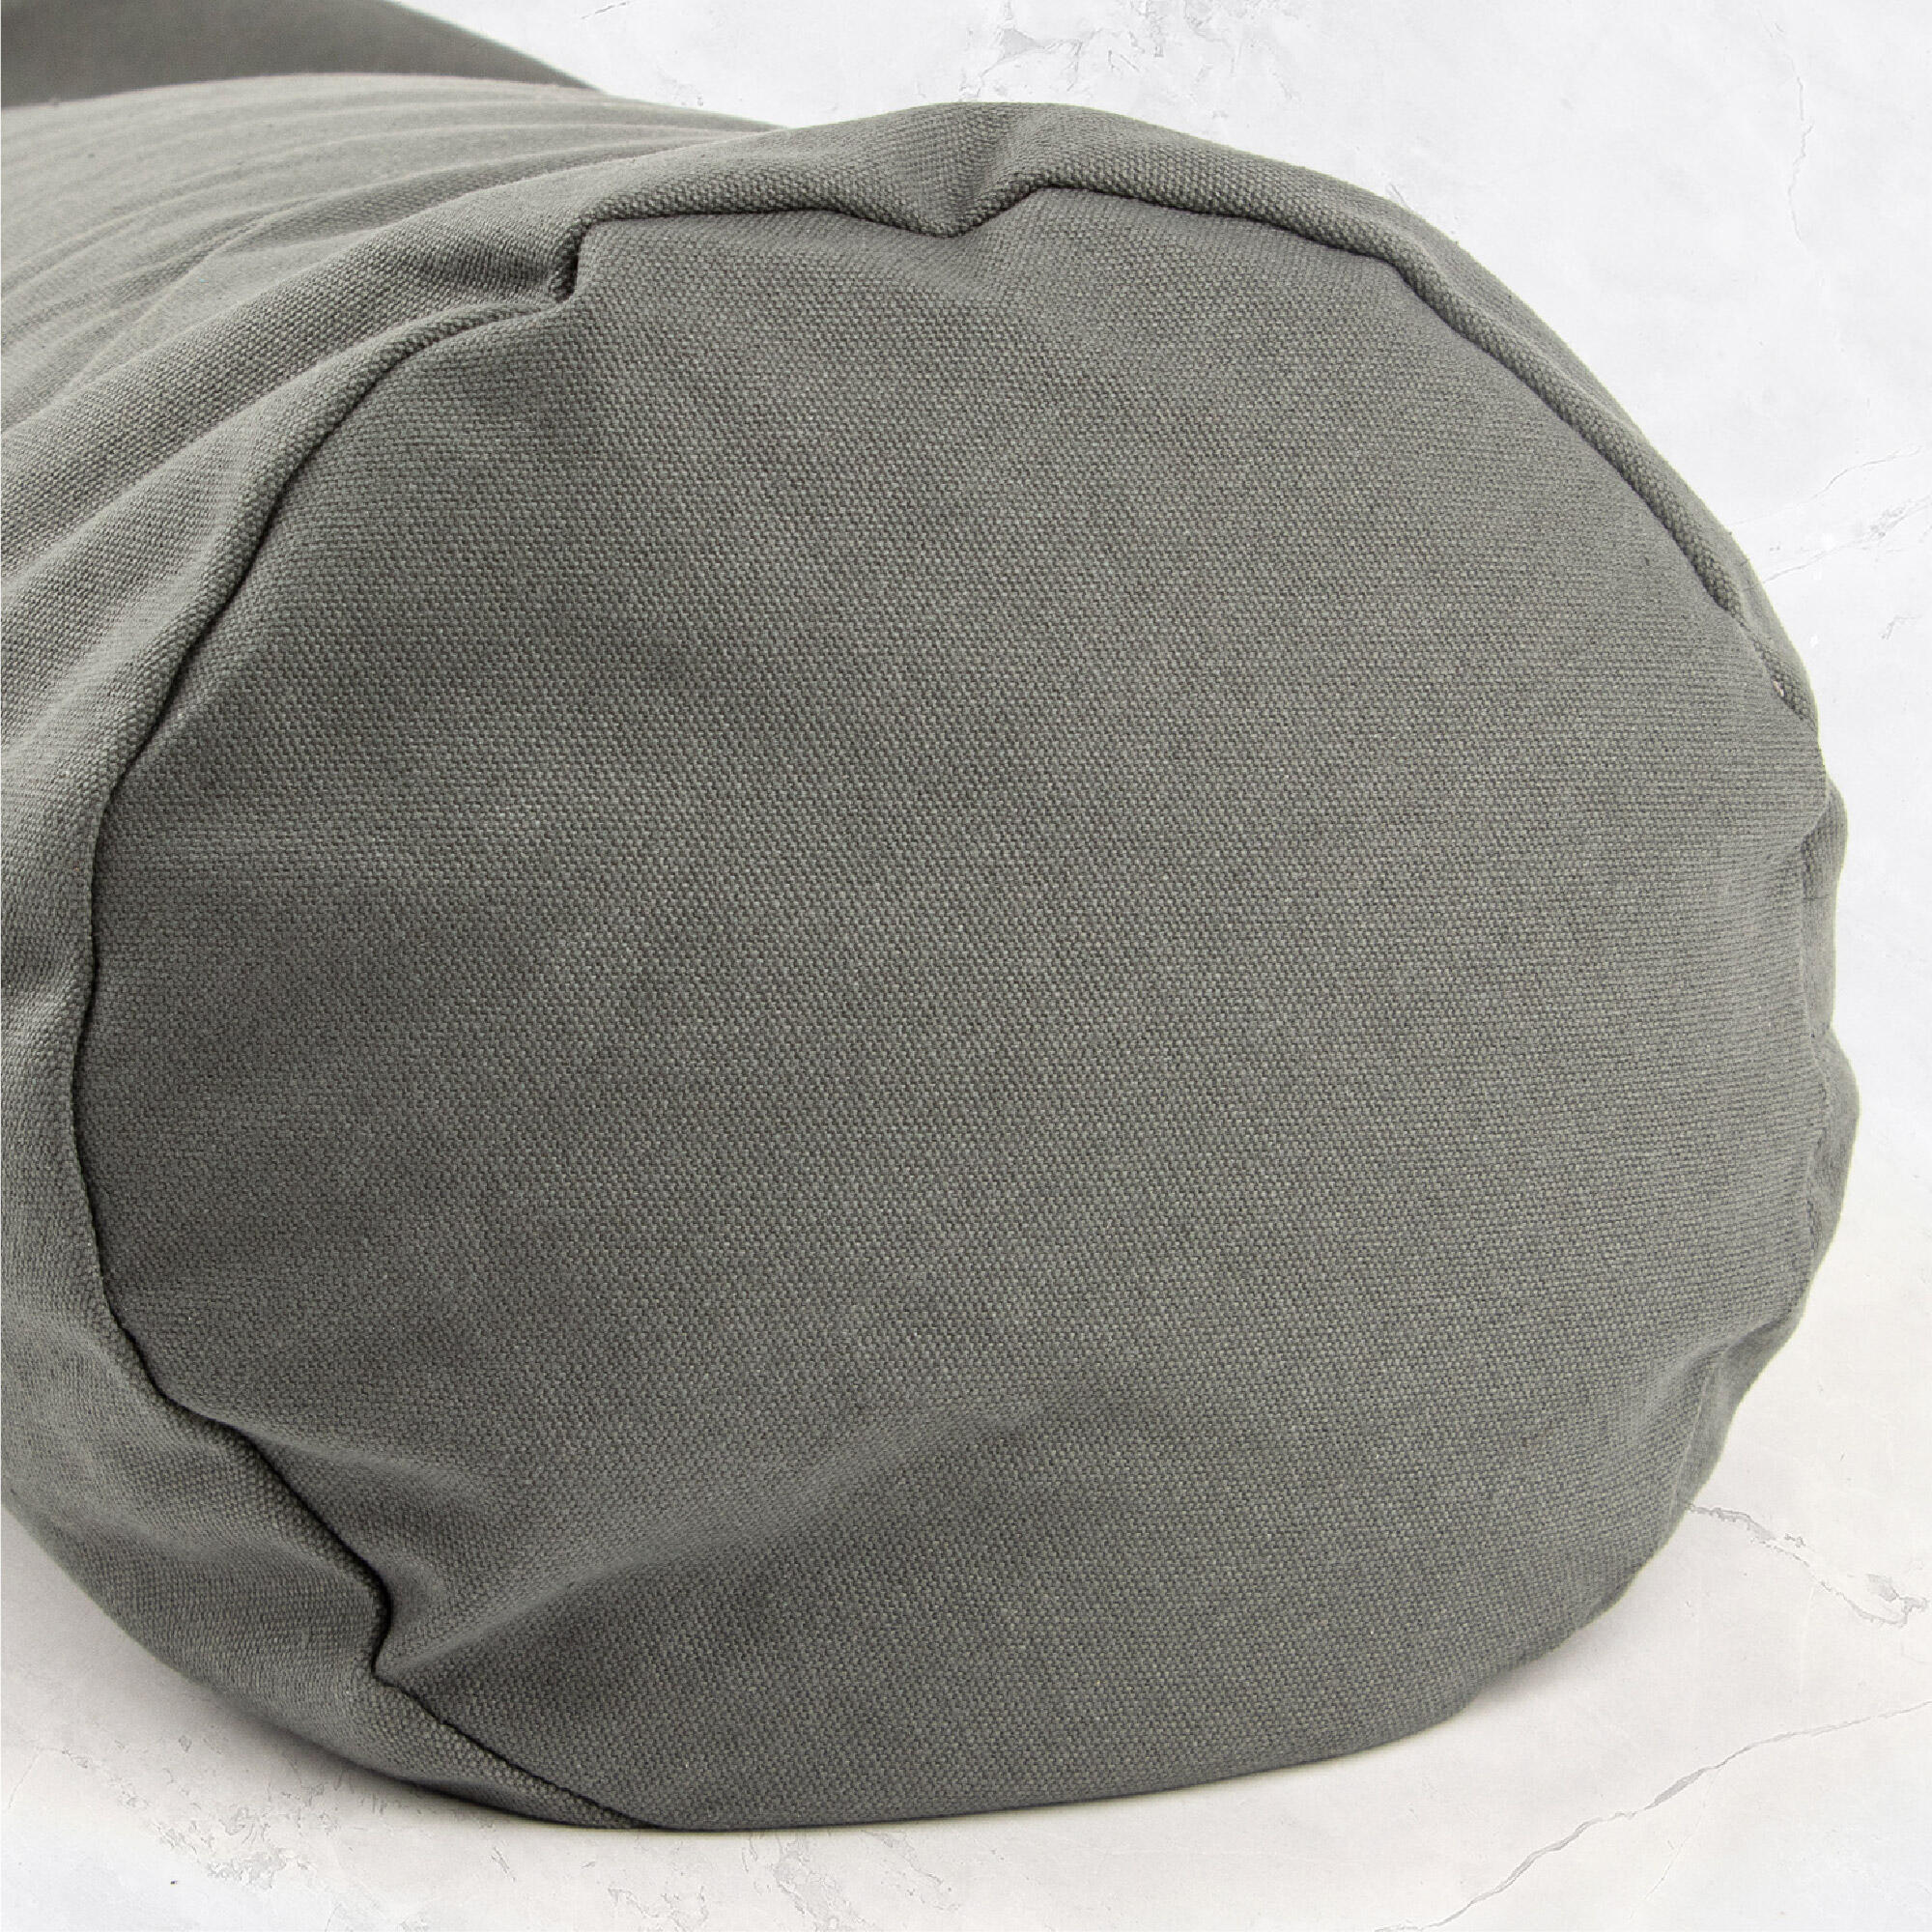 Myga Support Bolster Pillow - Grey 5/8